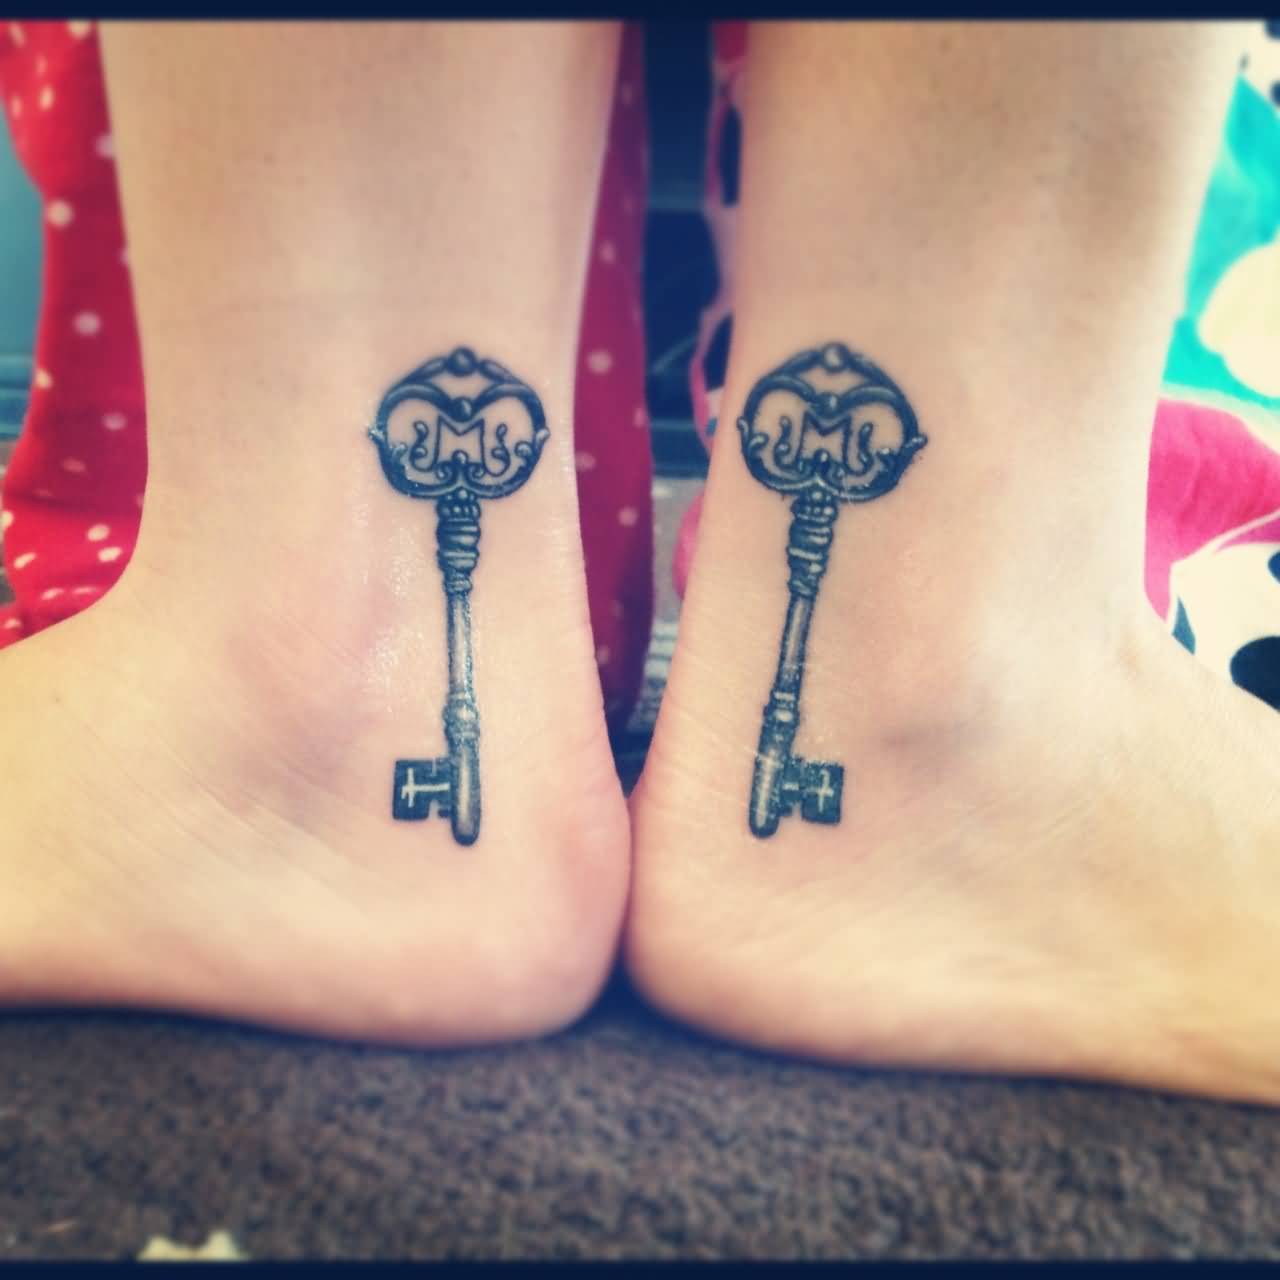 Nice Keys Matching Tattoos On Both Foots